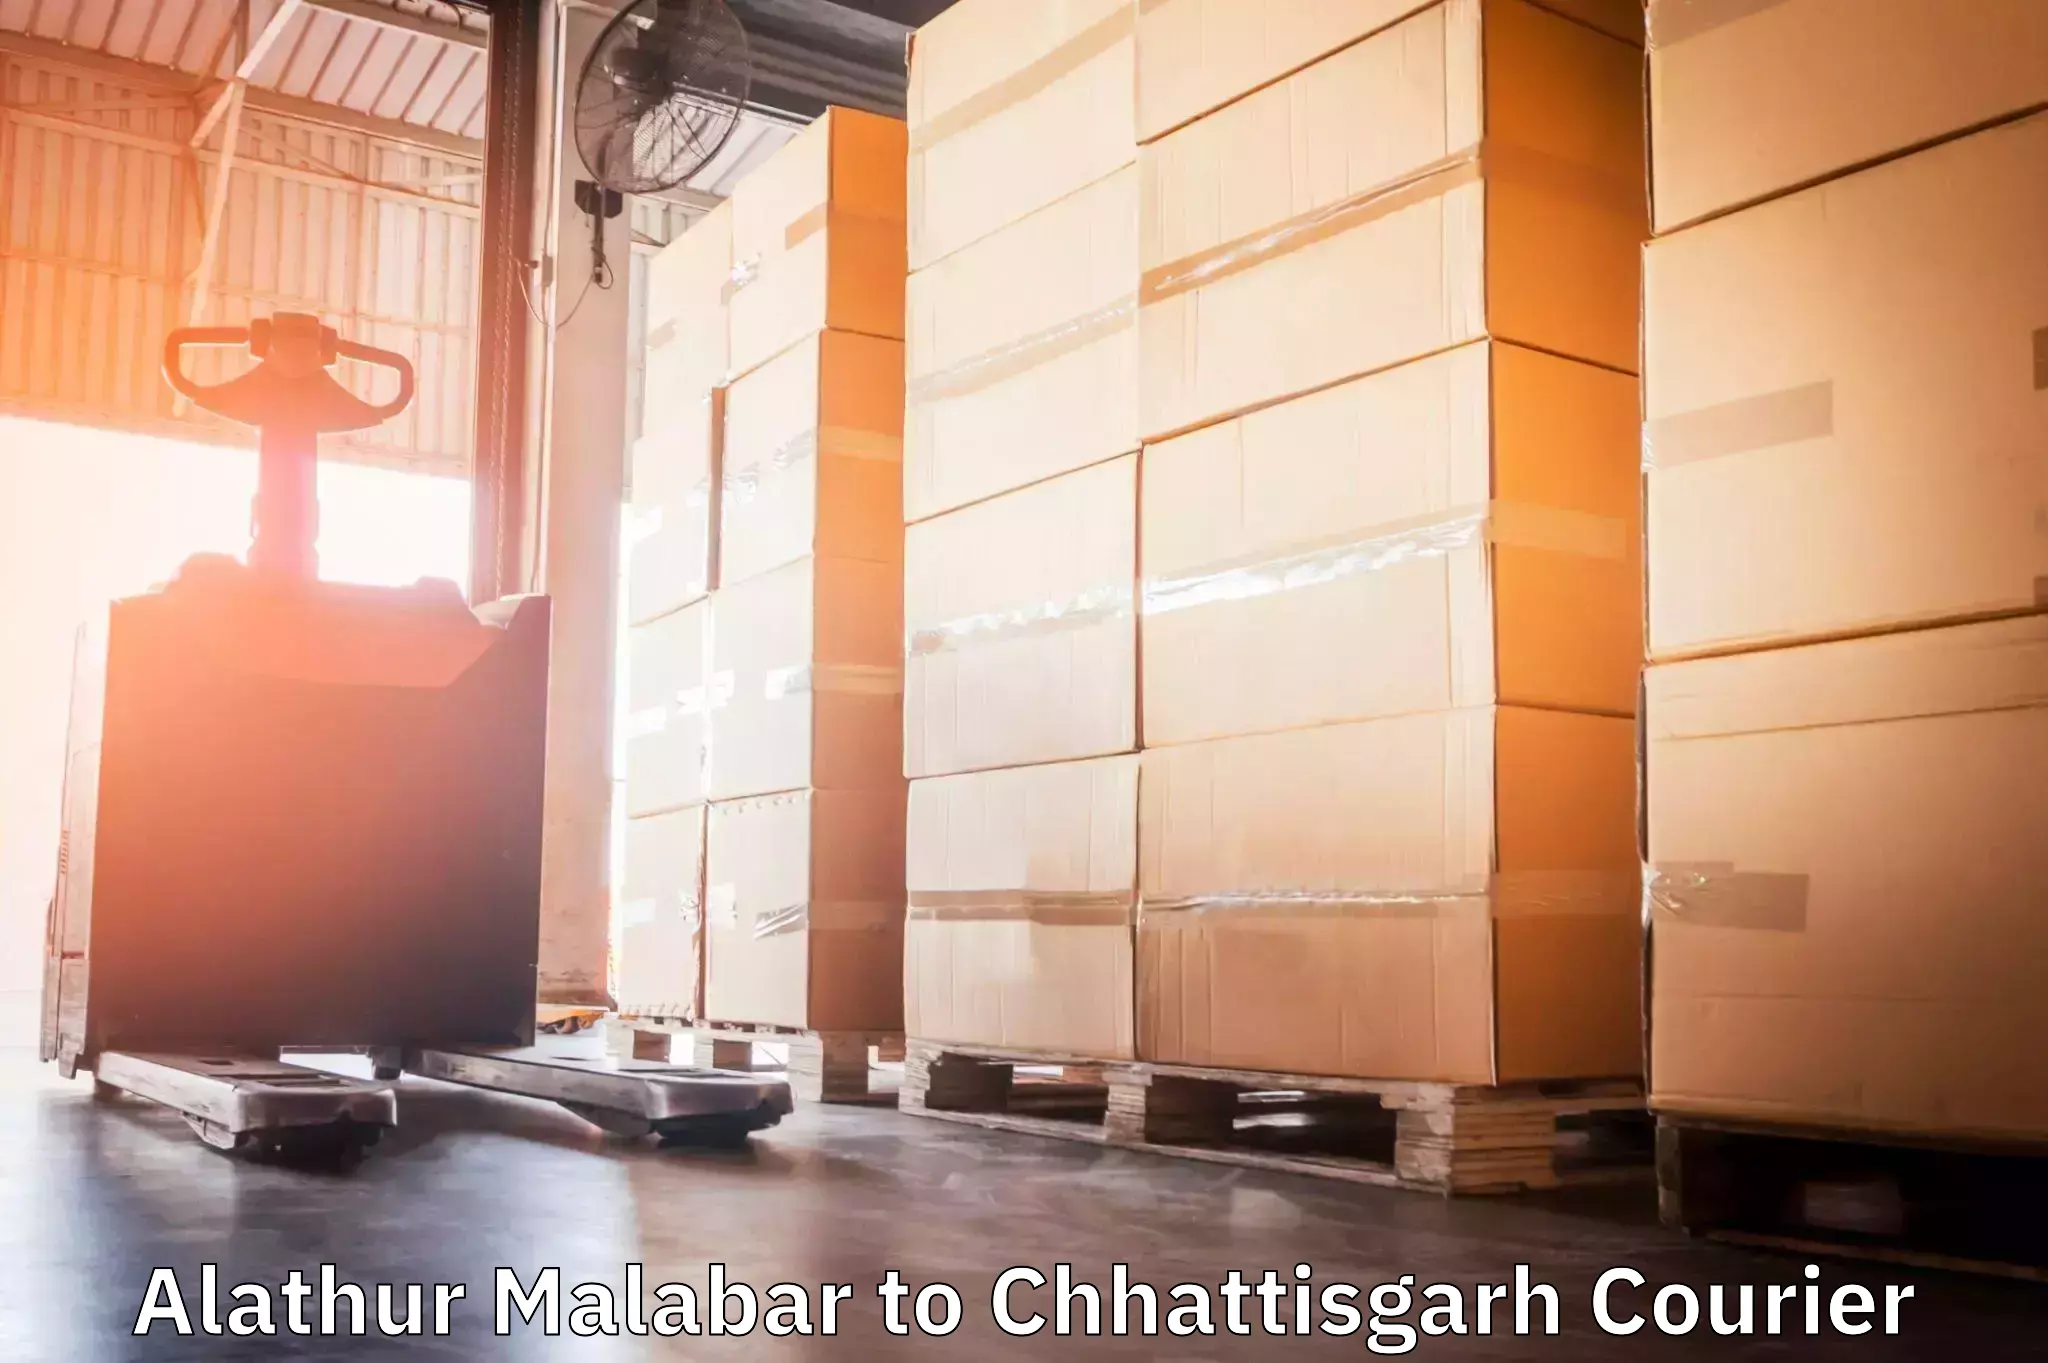 Courier service efficiency Alathur Malabar to Bastar